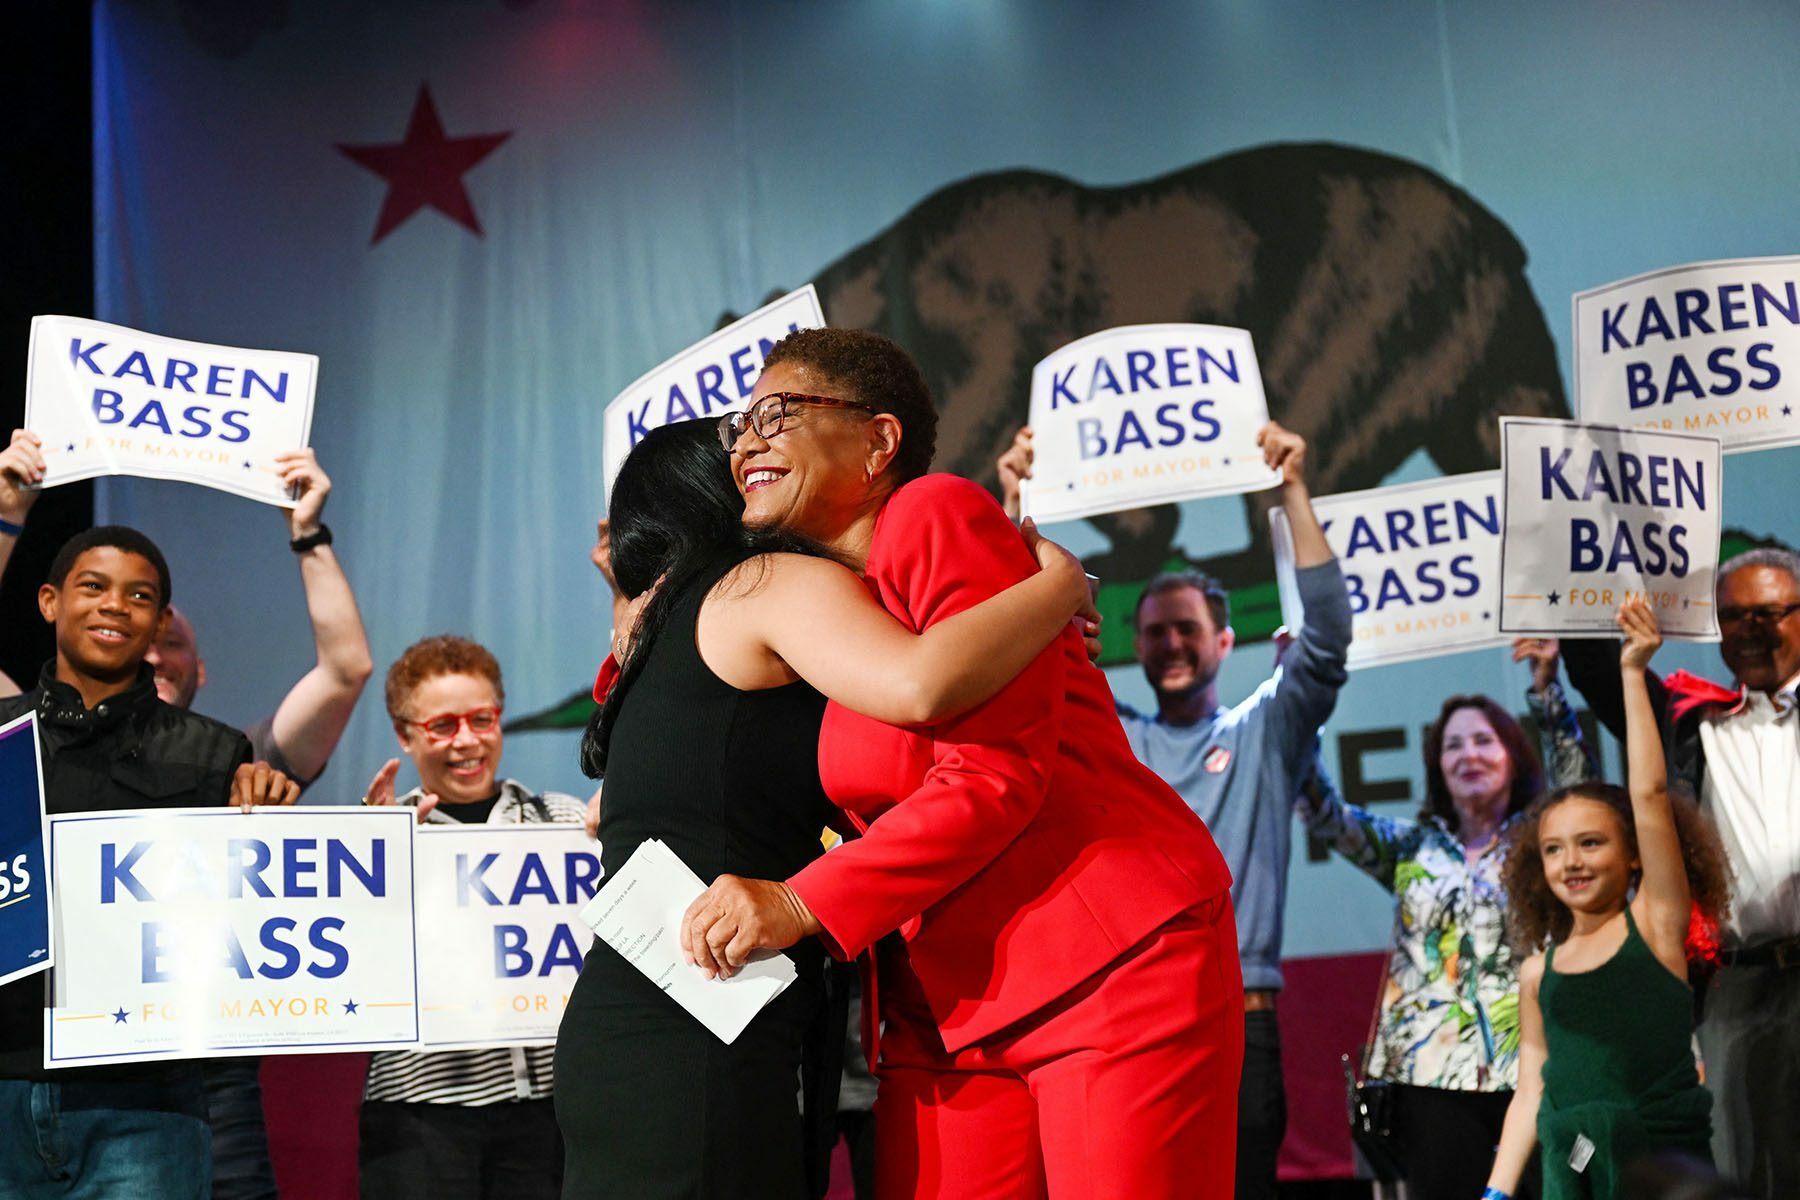 Karen Bass hugs her daughter as supporters holding 